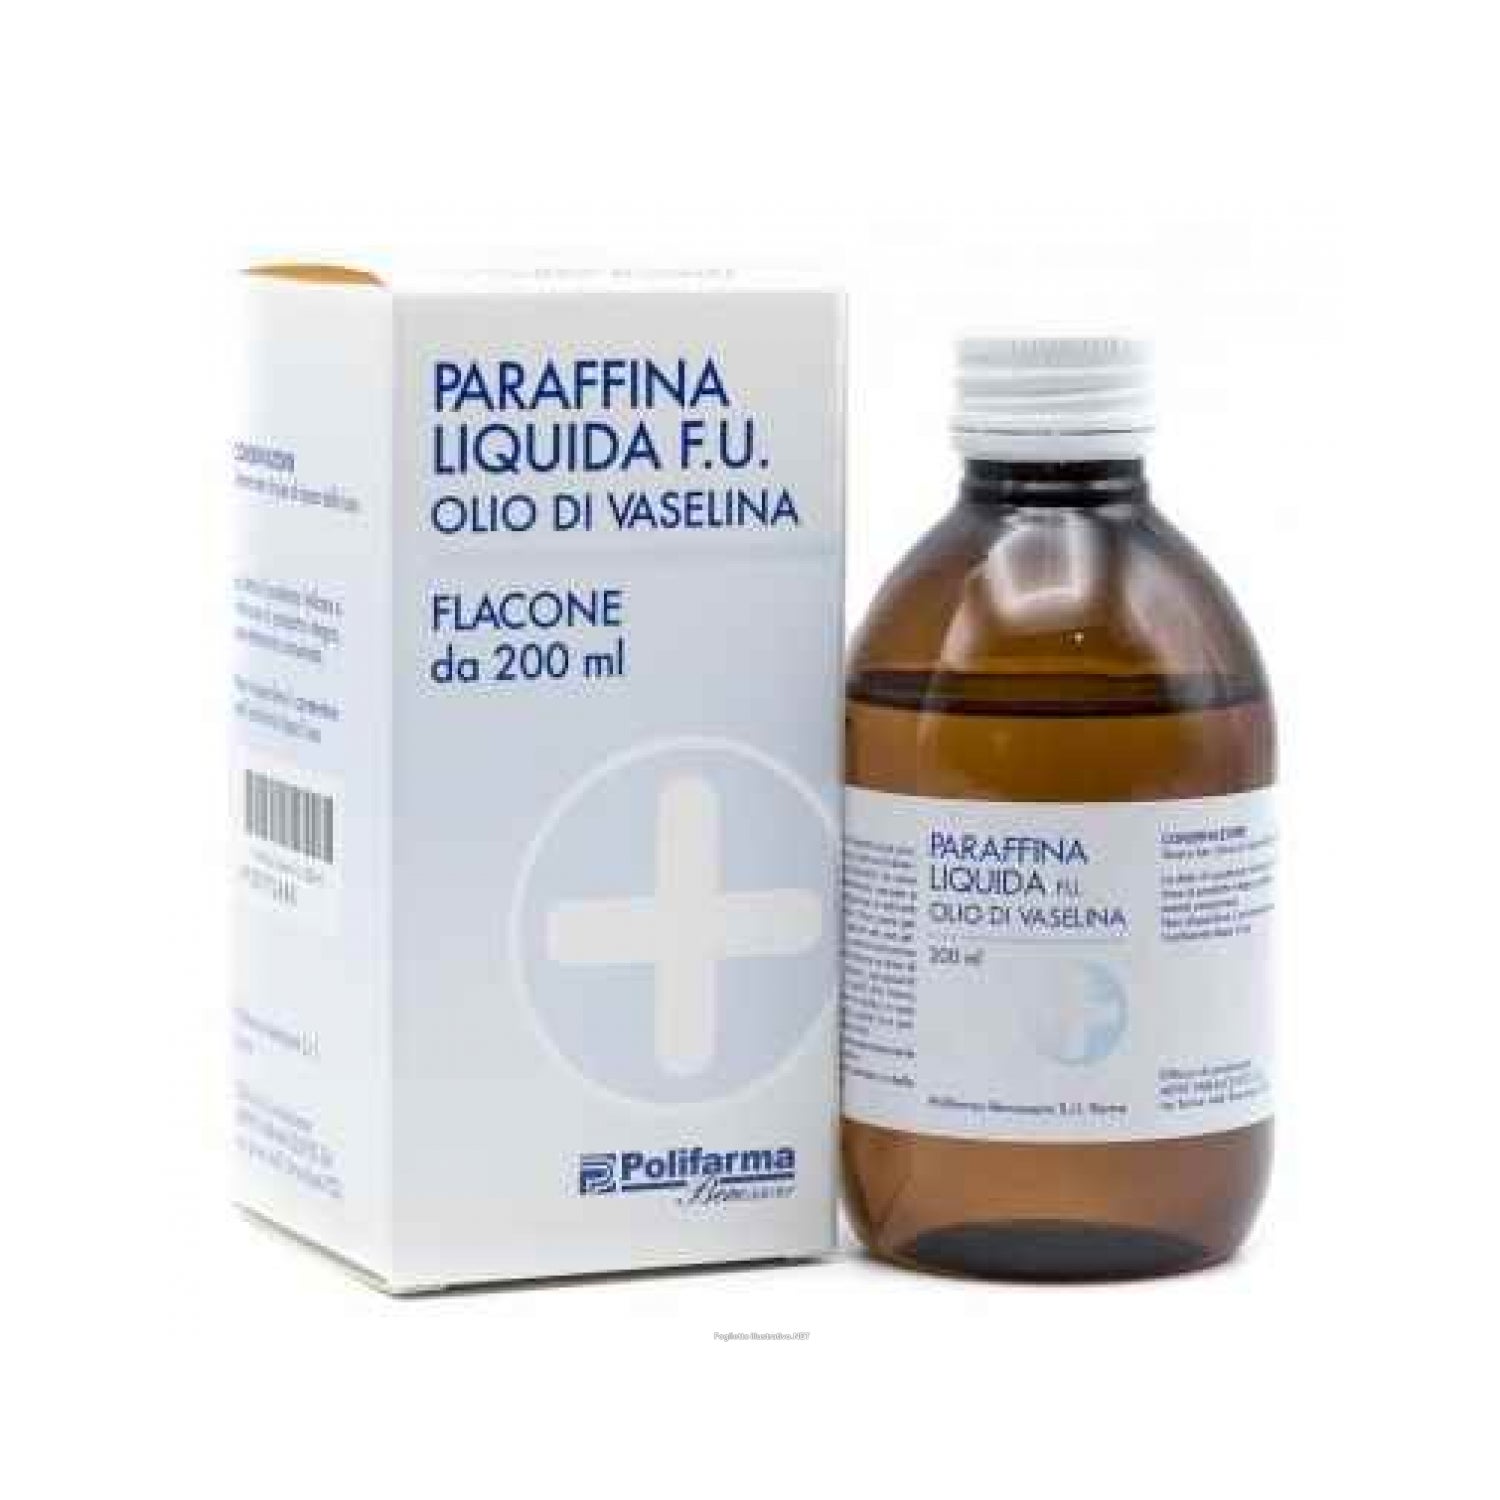 Parafina líquida ligera (USP-NF, BP, Ph. Eur.) puro, grado farma